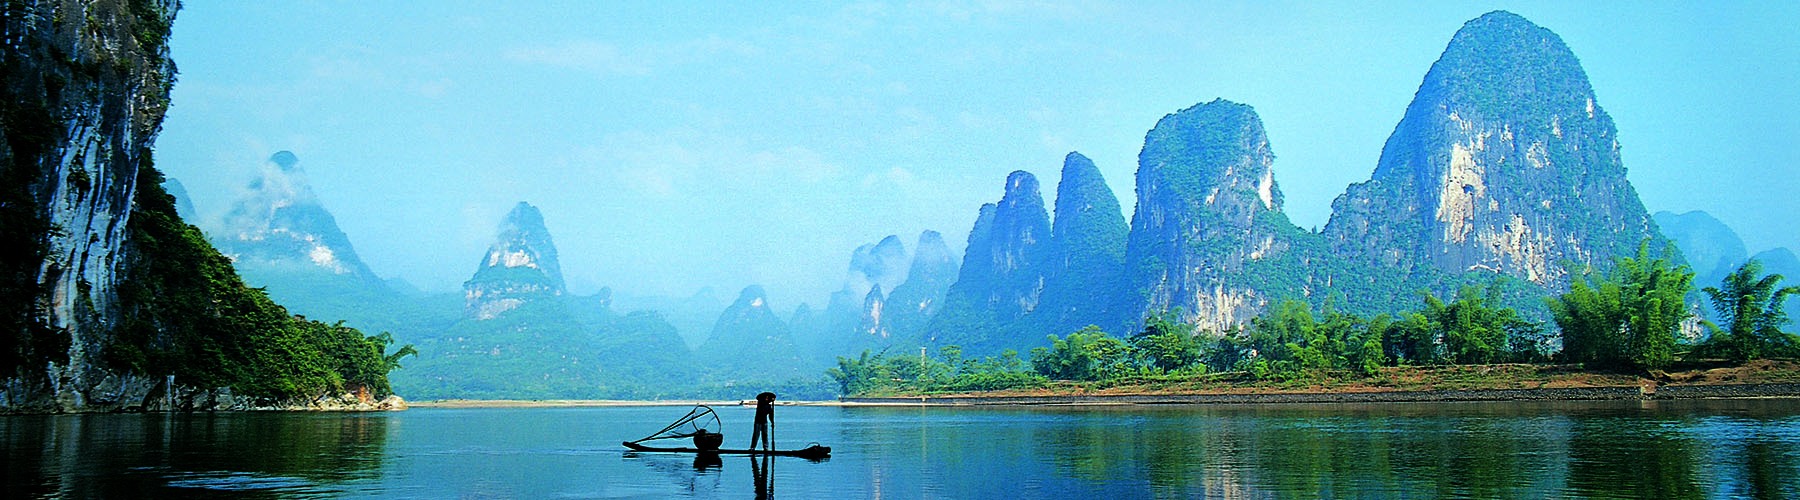 A Fisherman on the Li River